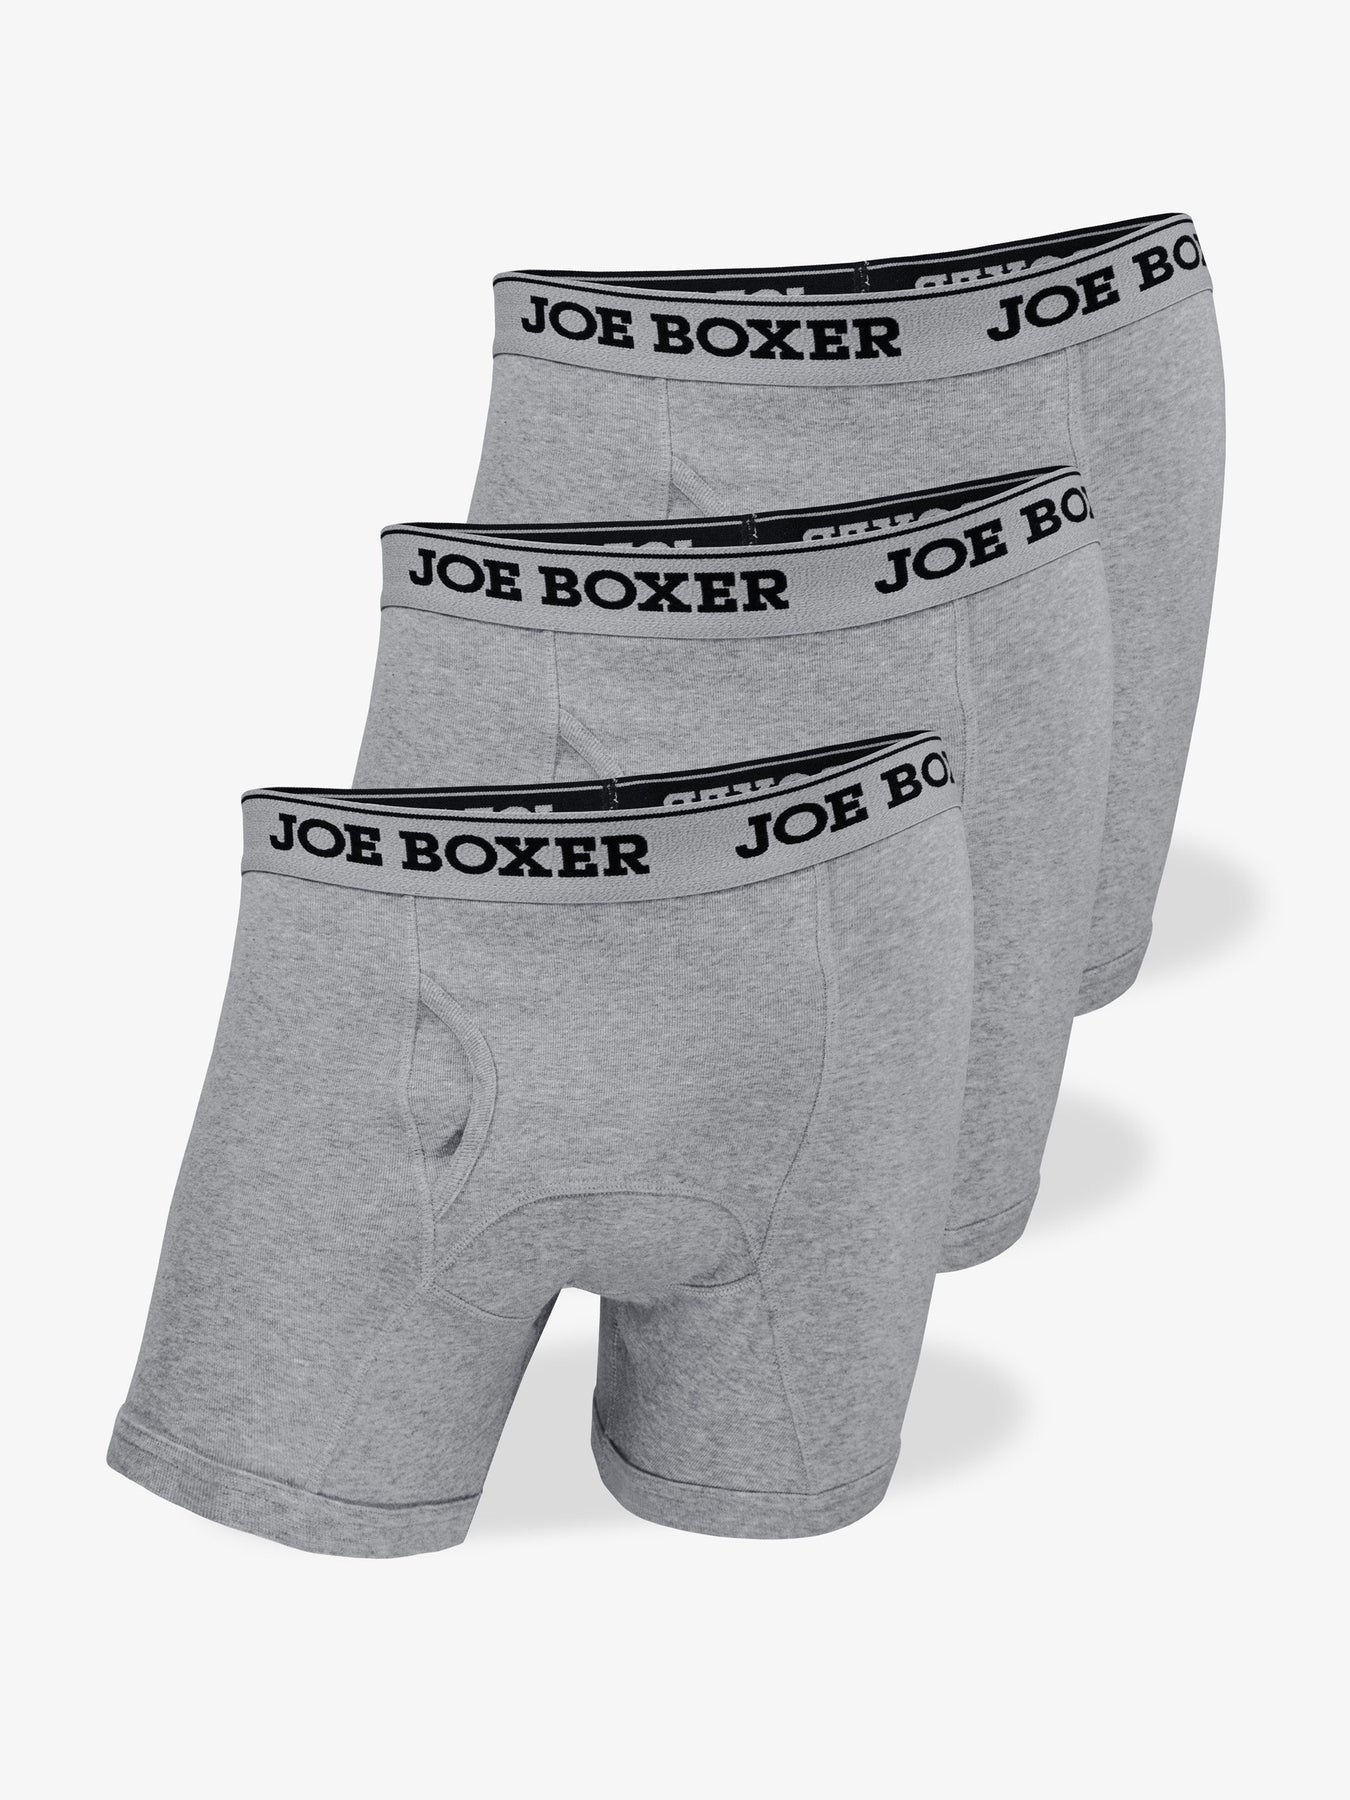 Joe Boxer Women's Juniors Crop Top Bra & Boyleg Panty Set LARGE Light Gray  NEW